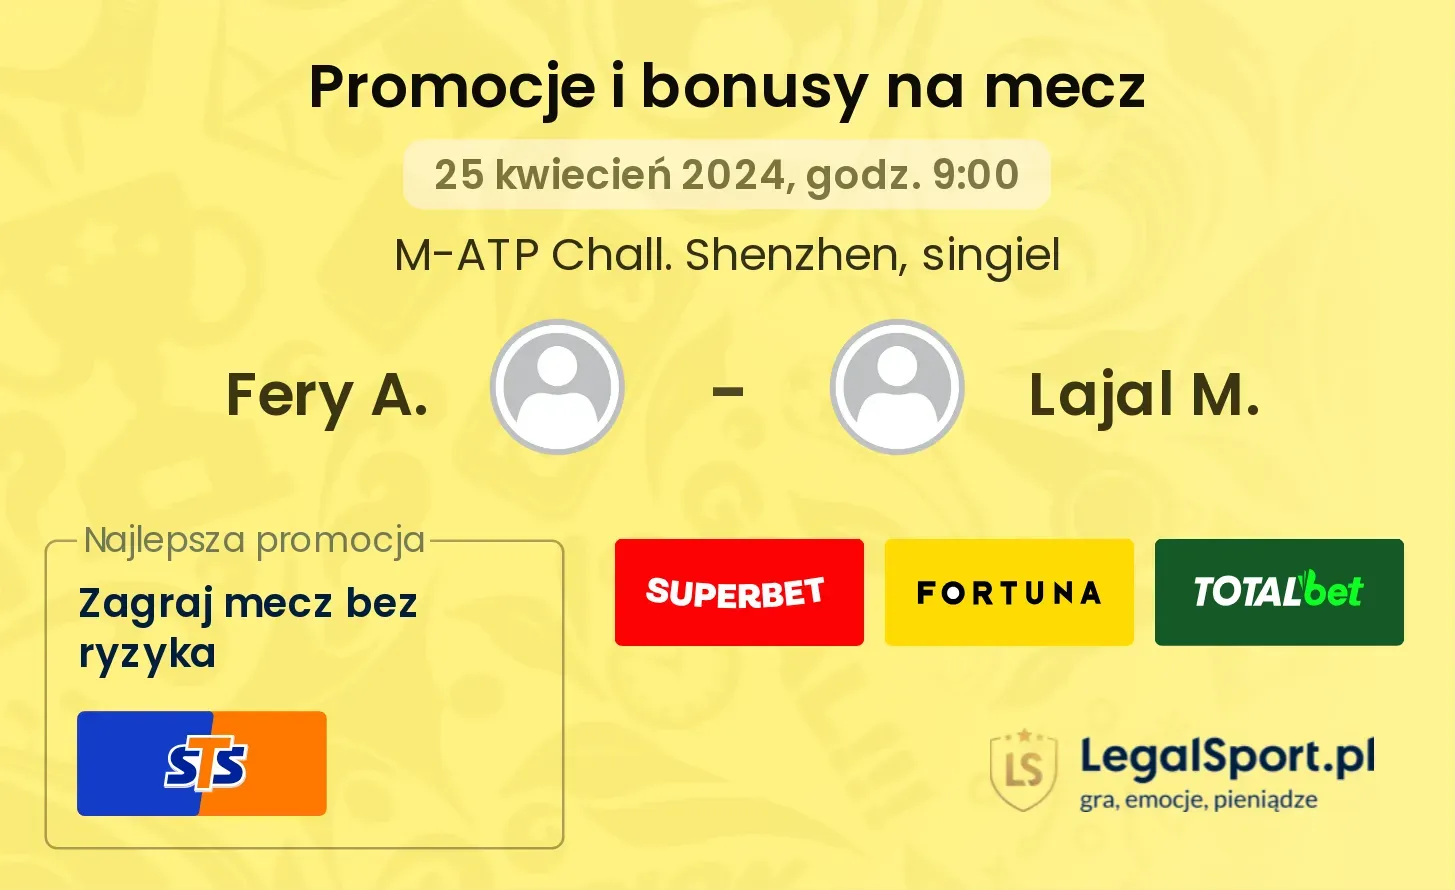 Fery A. - Lajal M. promocje bonusy na mecz